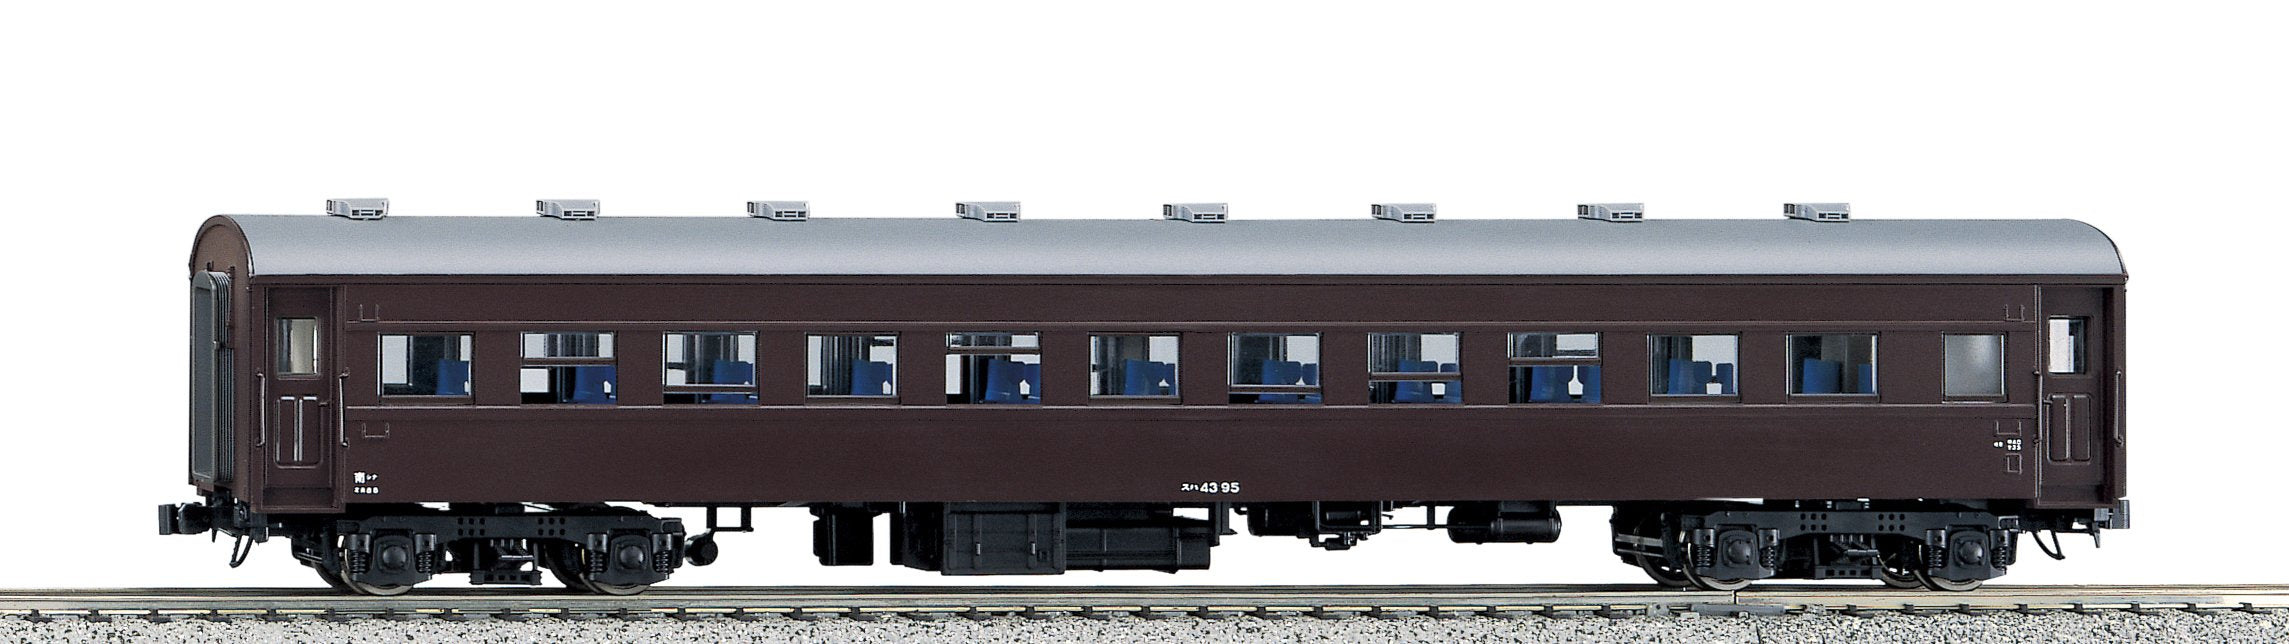 Kato Ho Gauge Passenger Car Model Suha43 Brown 1-506 Railway Collectible